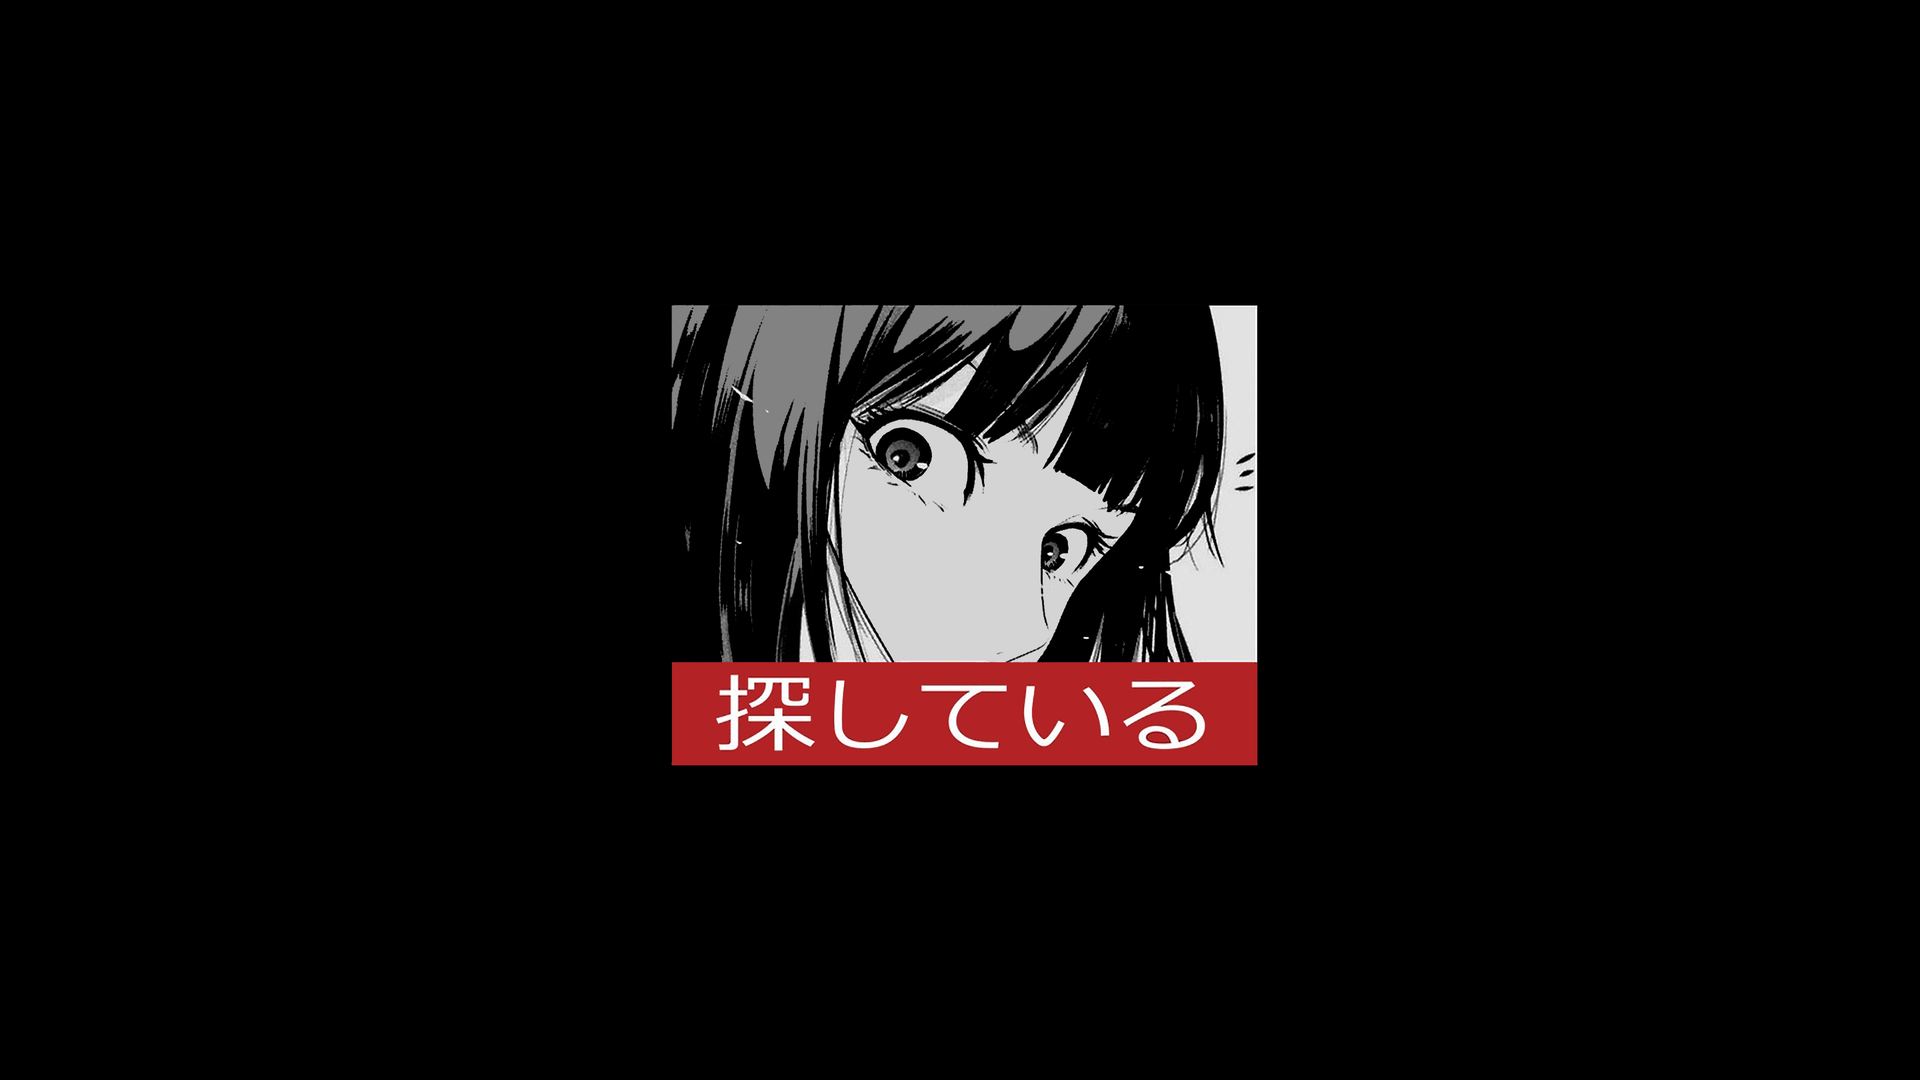 Wallpaper / anime, minimalism, black, Japan, Japanese characters, kanji free download